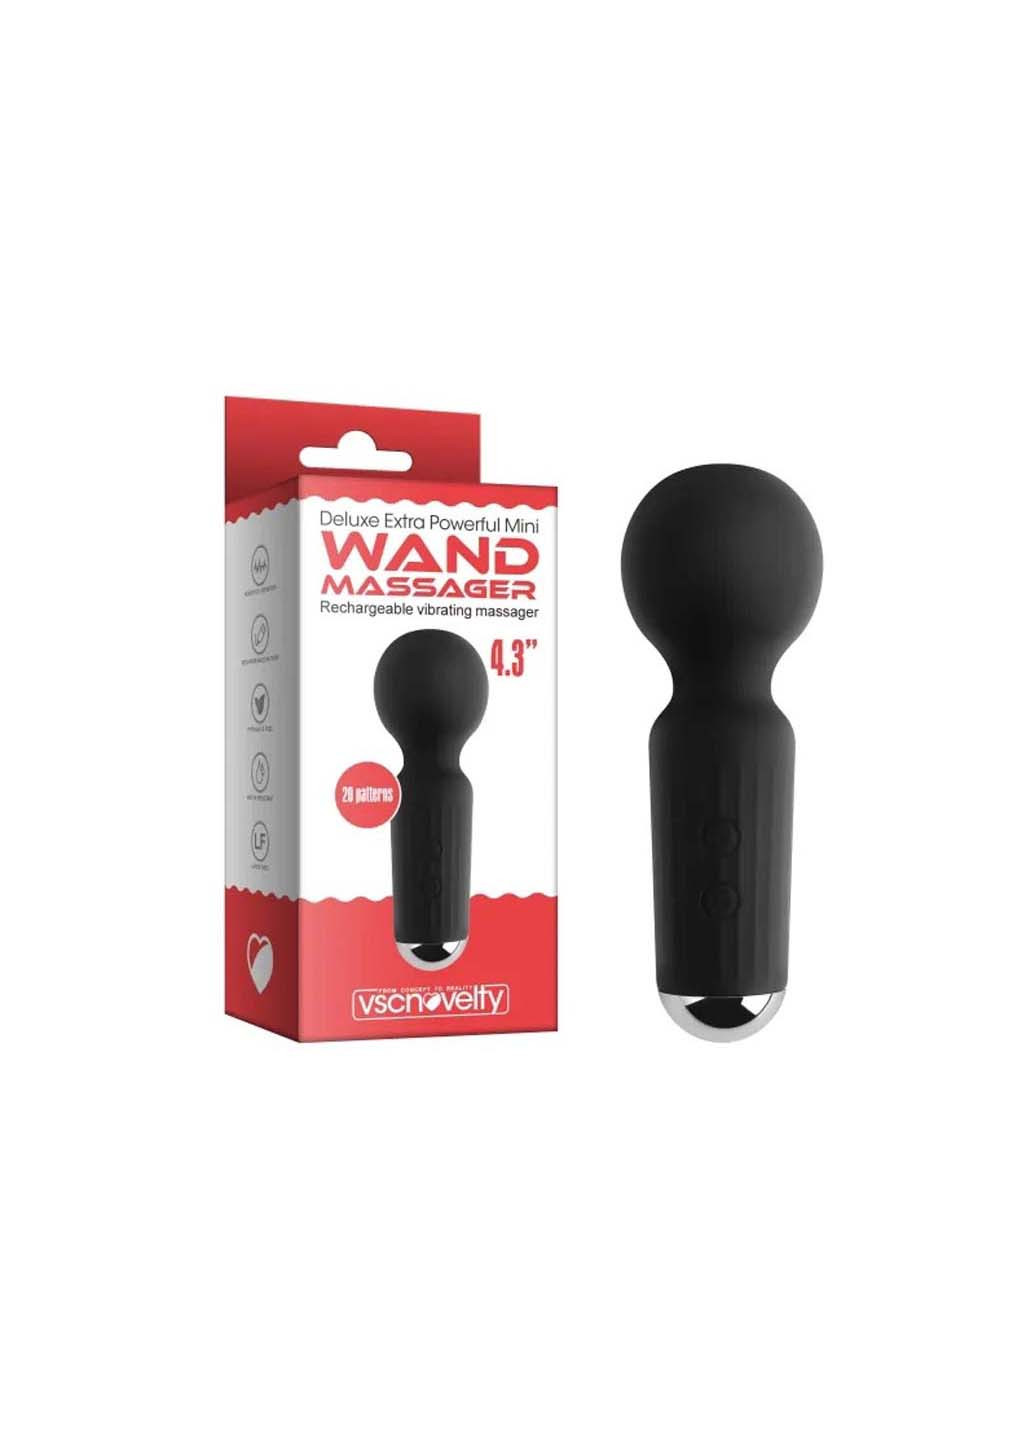 Міні вібростимулятор для жінок Deluxe Extra Powerful Mini Wand Massager Vscnovelty (277608287)